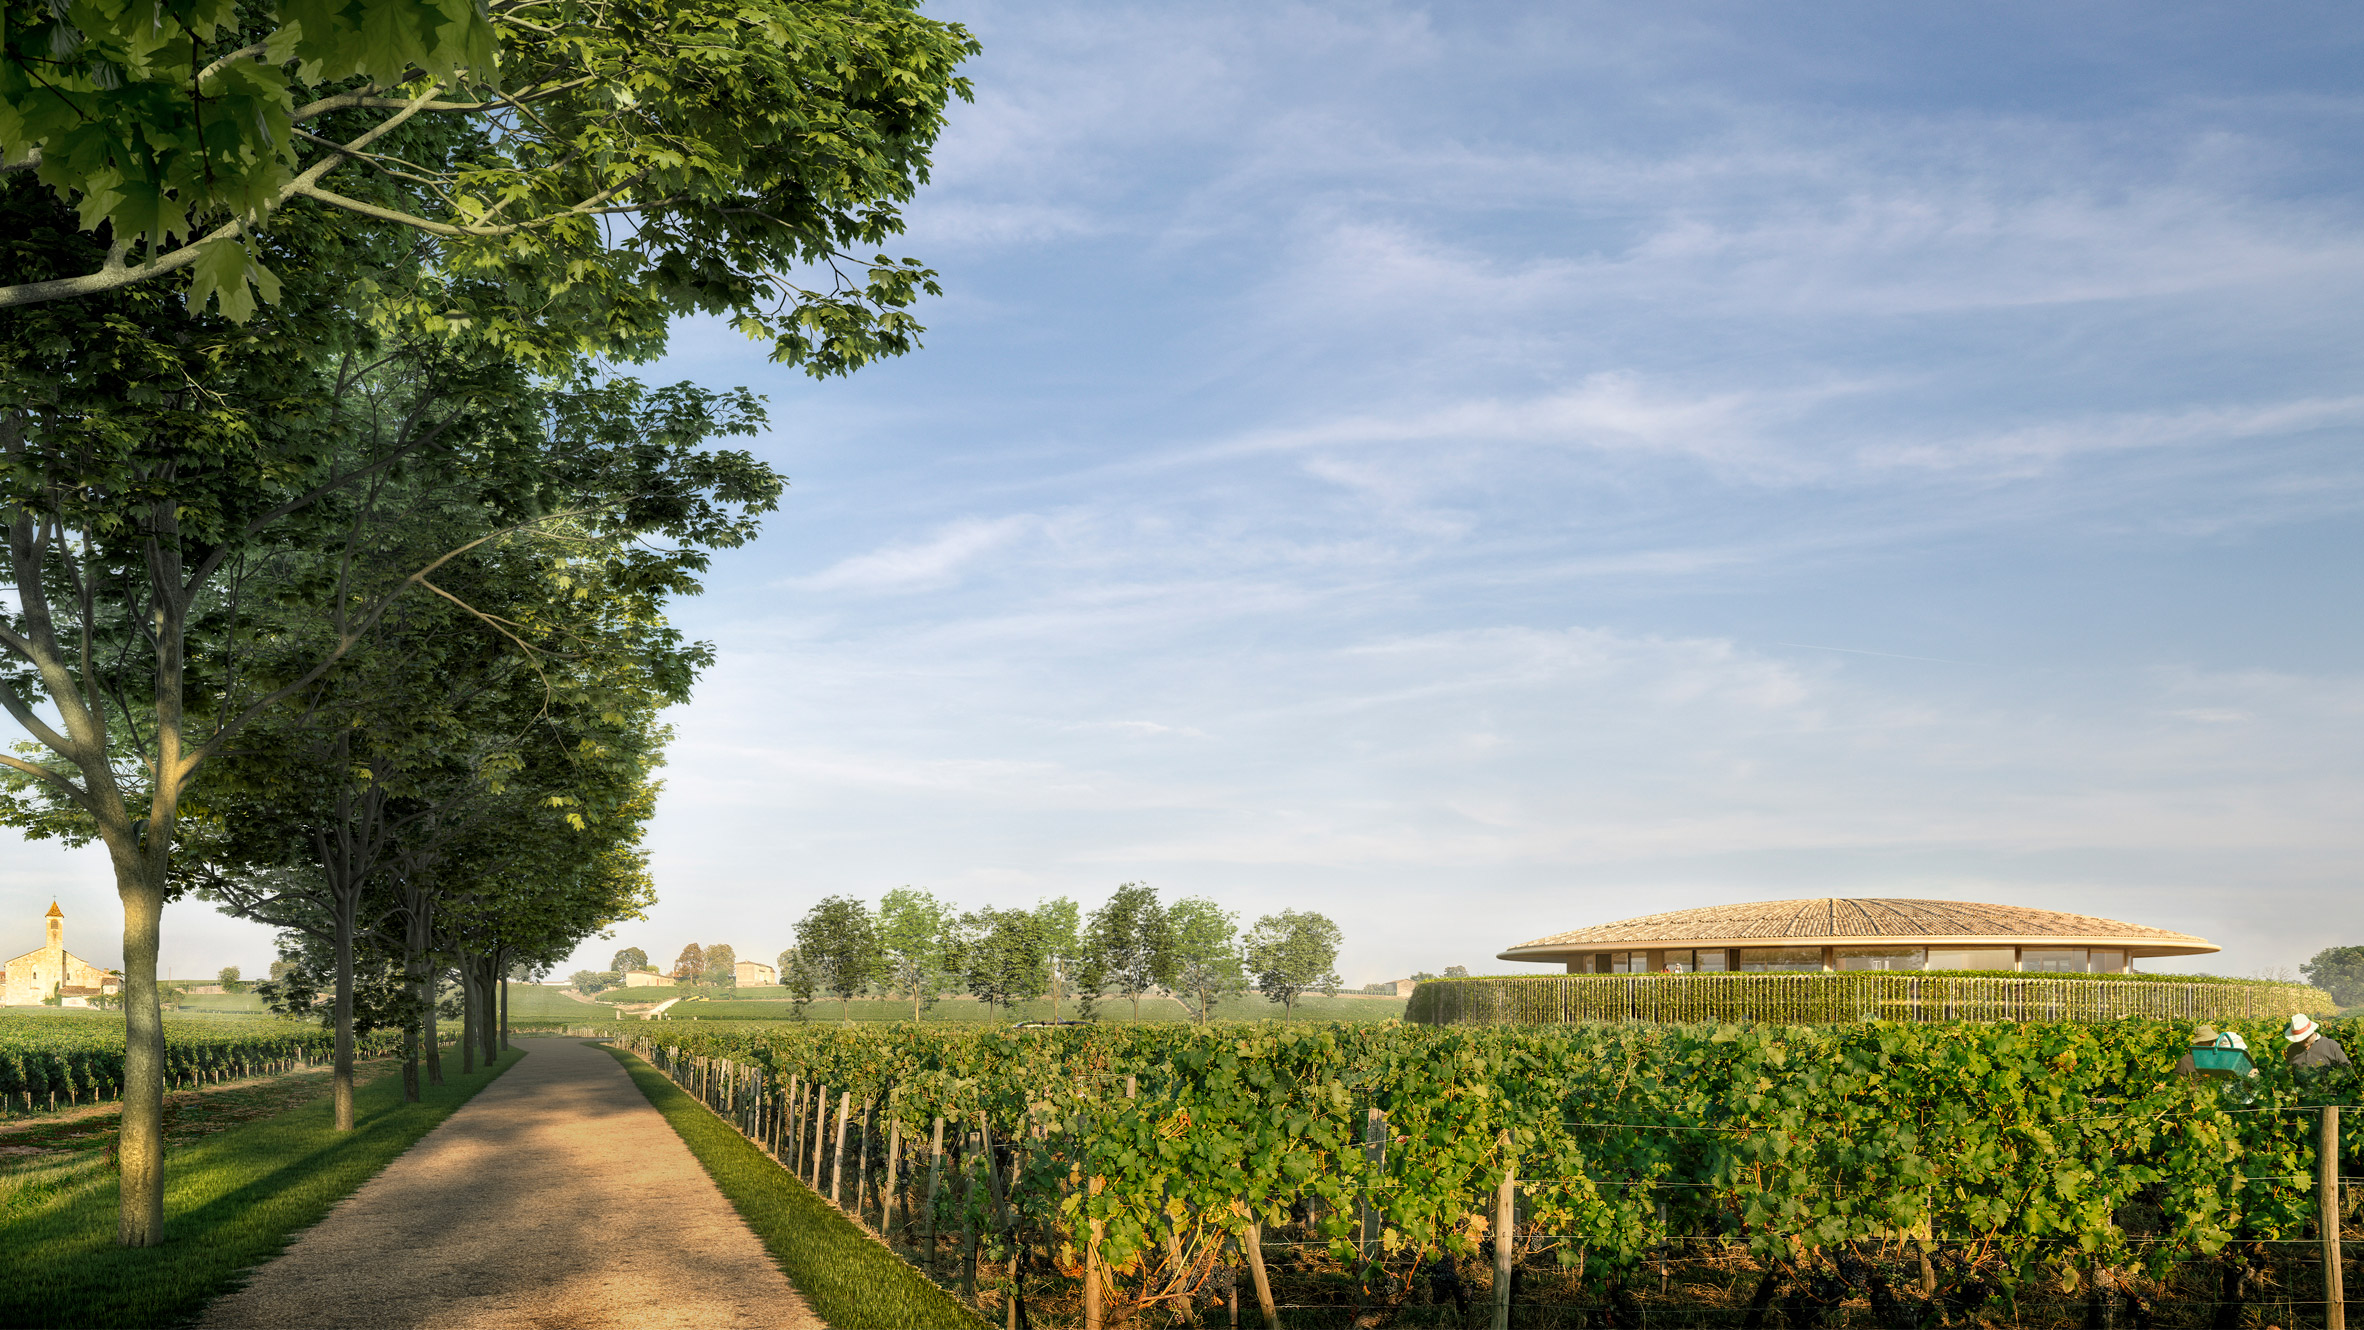 Le Dôme winery designed by Foster + Partners for Saint-Émilion, France